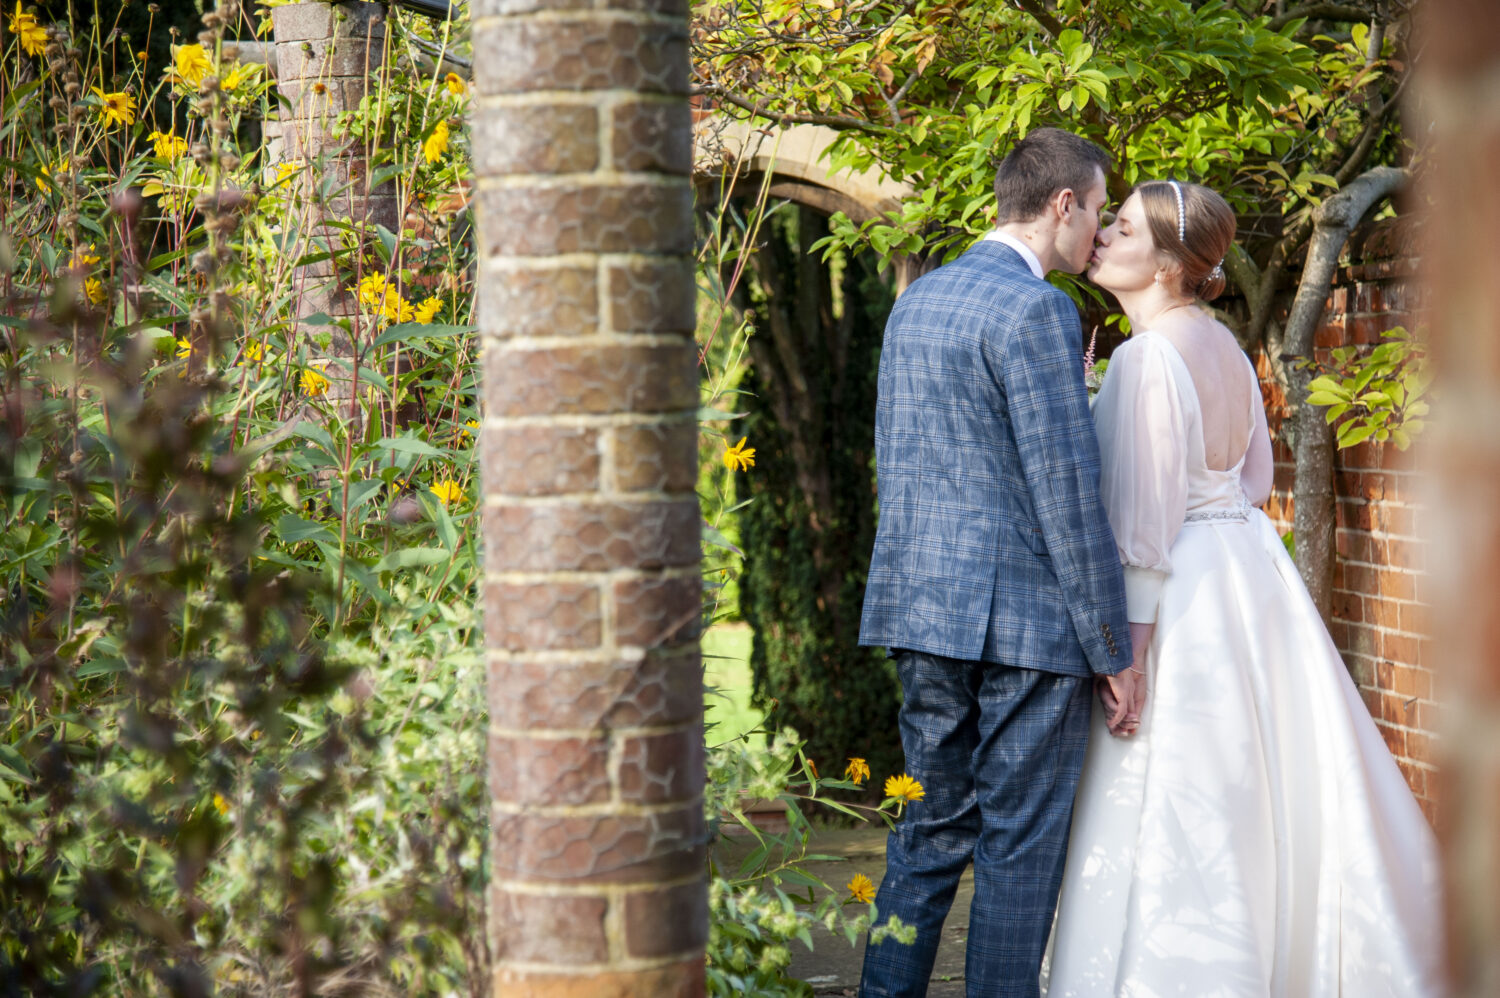 lanwadeshall, bride groom kissing, holding hands, garden, blue check suit, white dress,brick column,